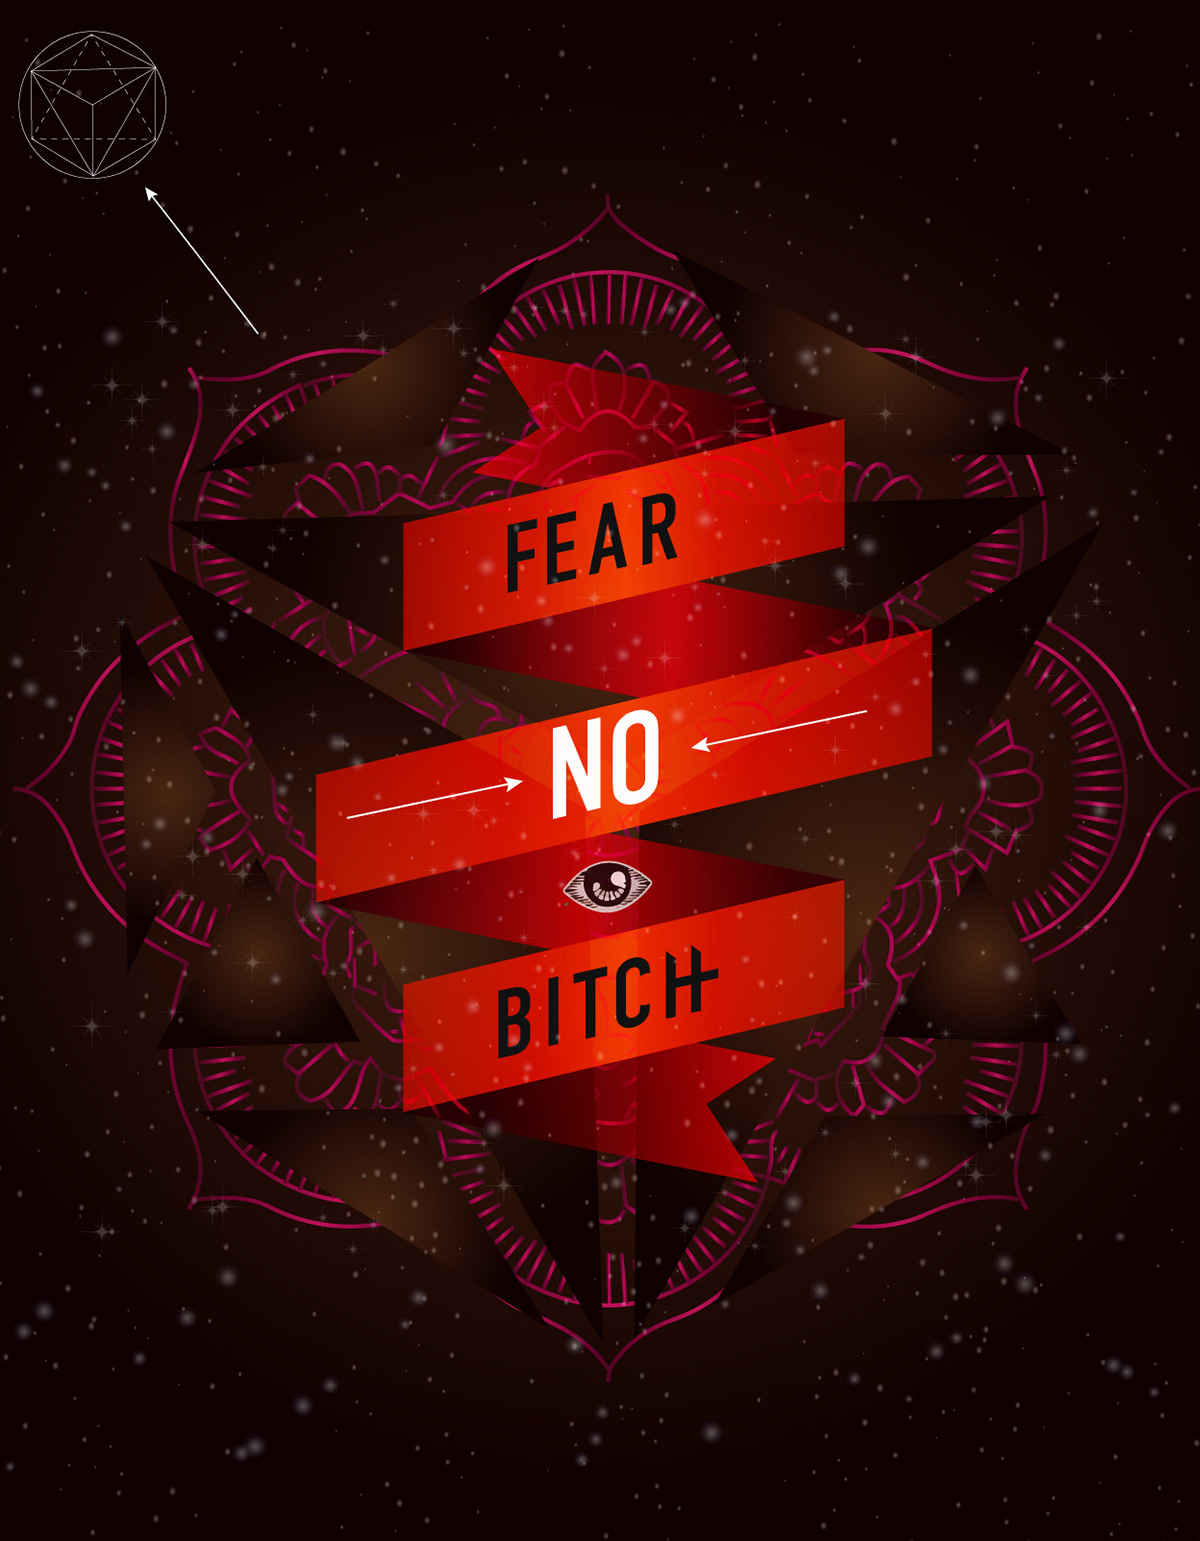 FEAR NO BITCH frases inspiring no fear